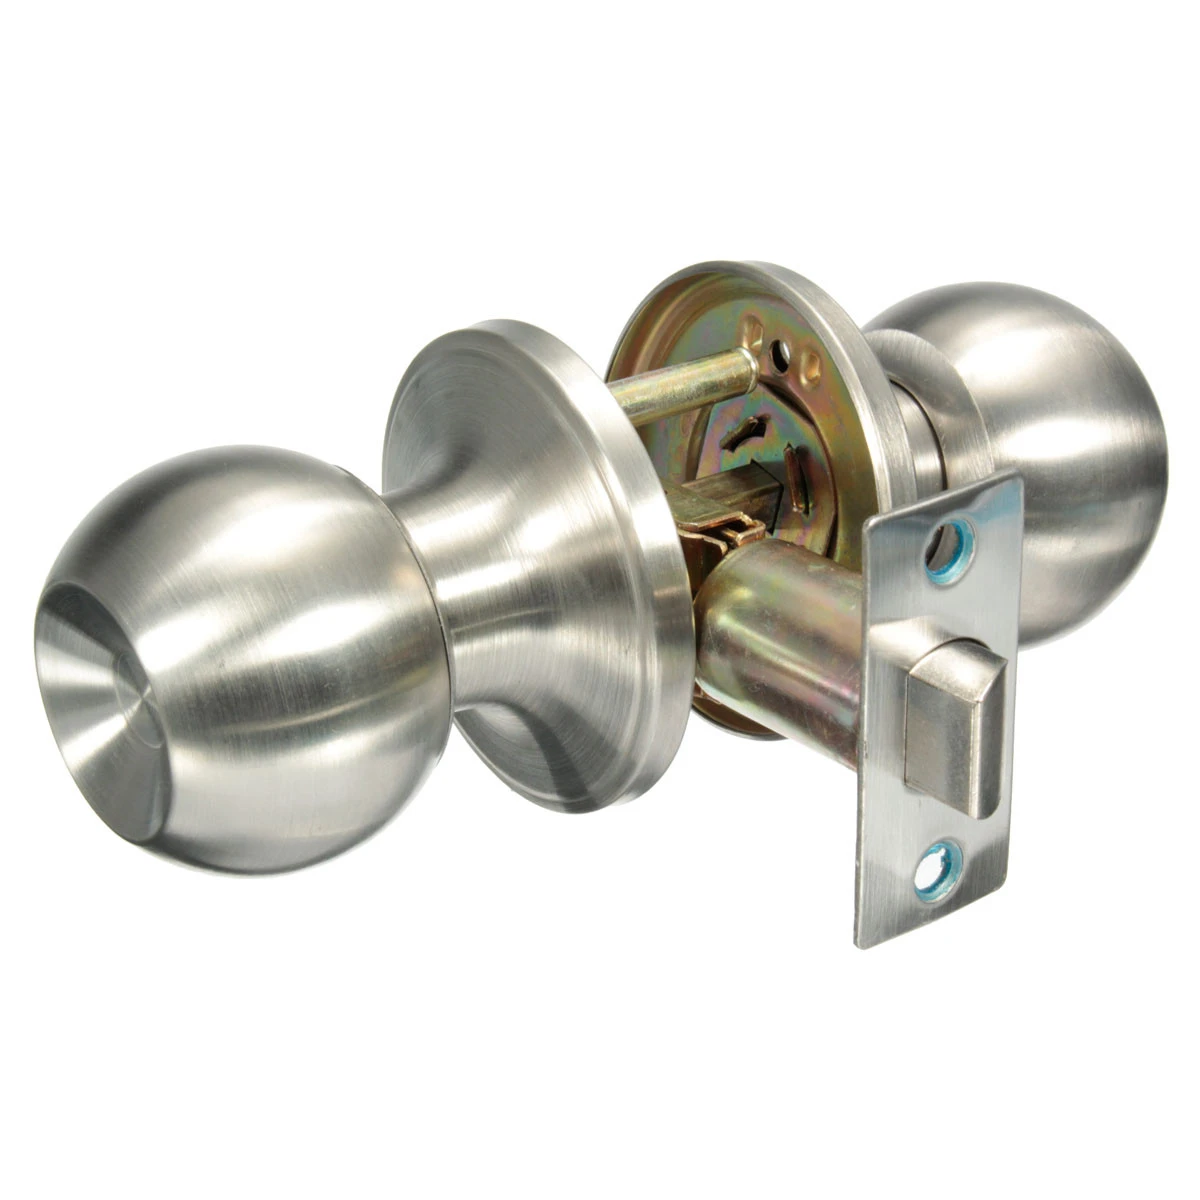 Stainless Steel Door Lever Handle Knob Entry Entrance Lock Latch W/ Key Bathroom